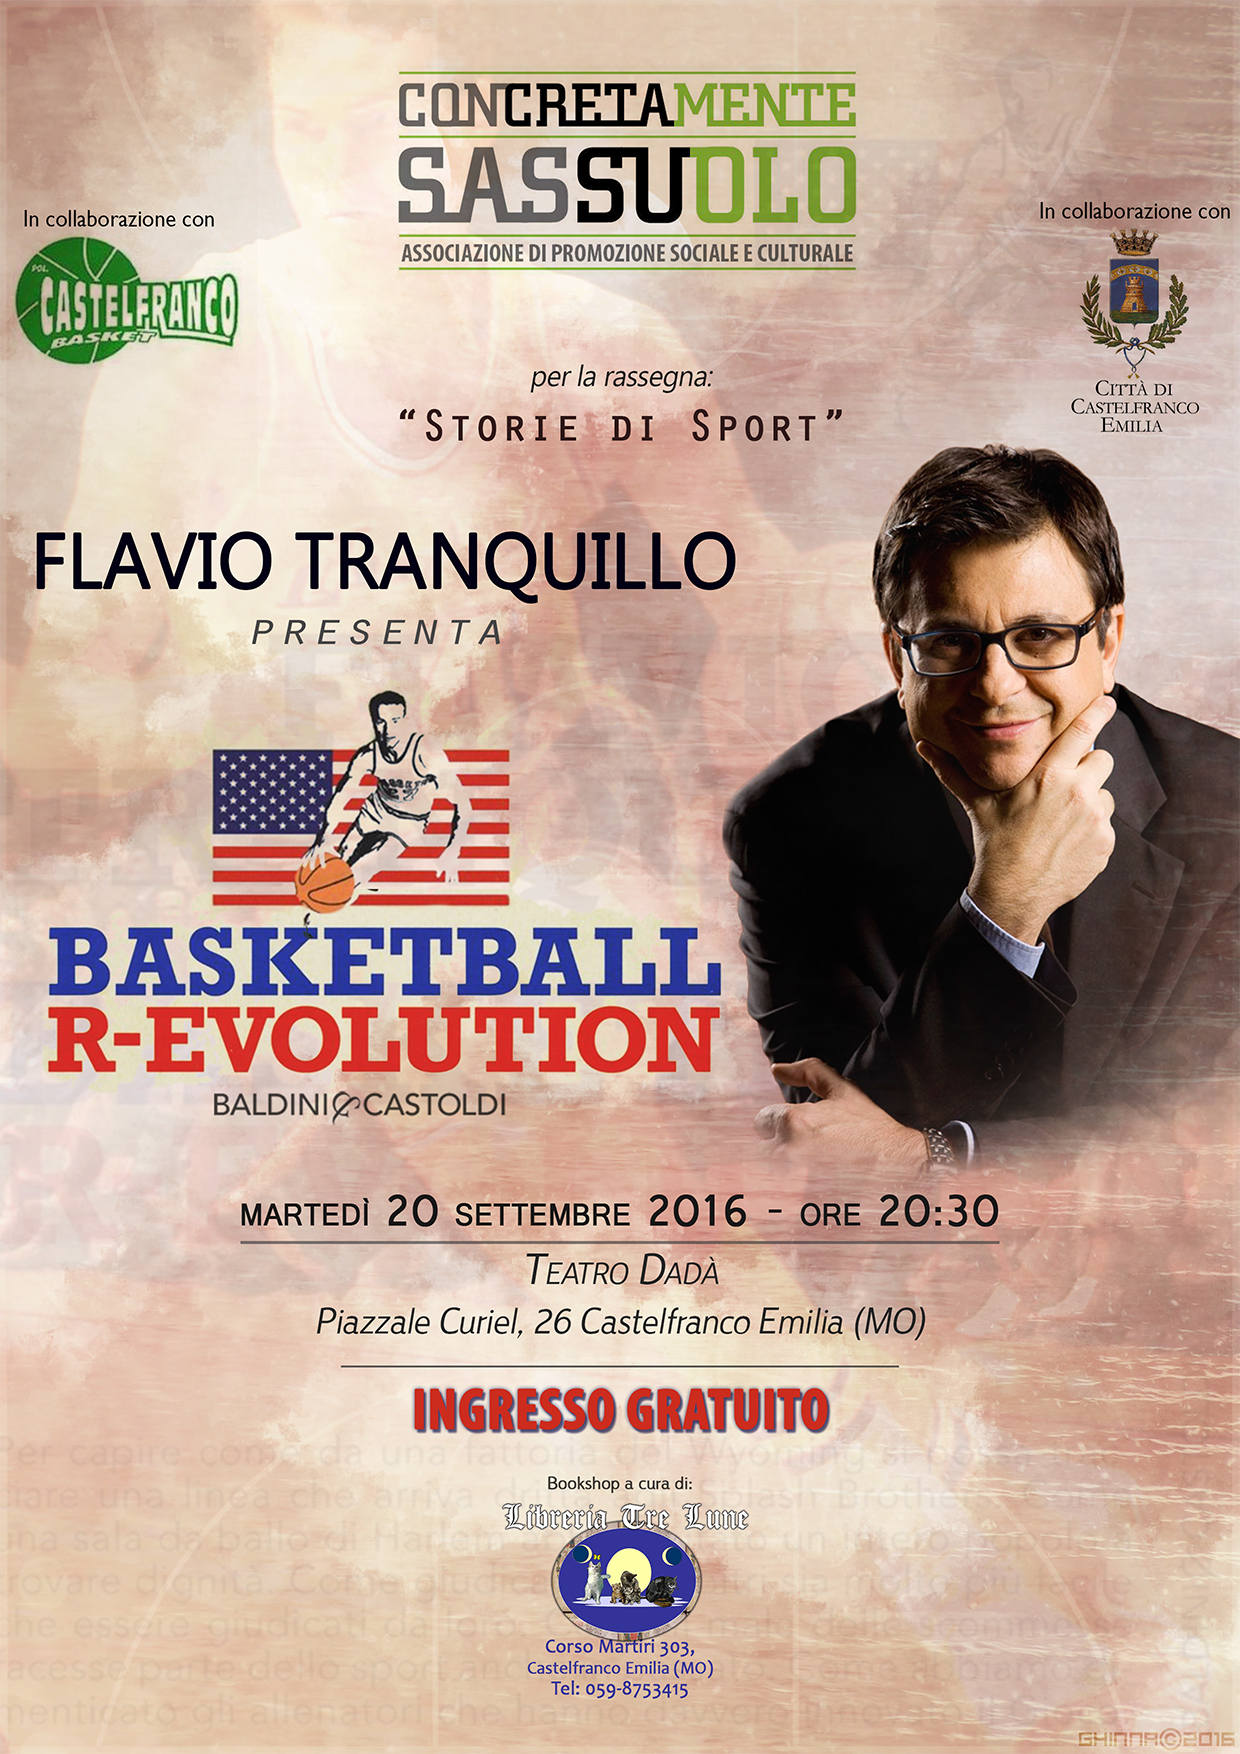 FLAVIO TRANQUILLO PRESENTA 'BASKETBALL R- EVOLUTION'